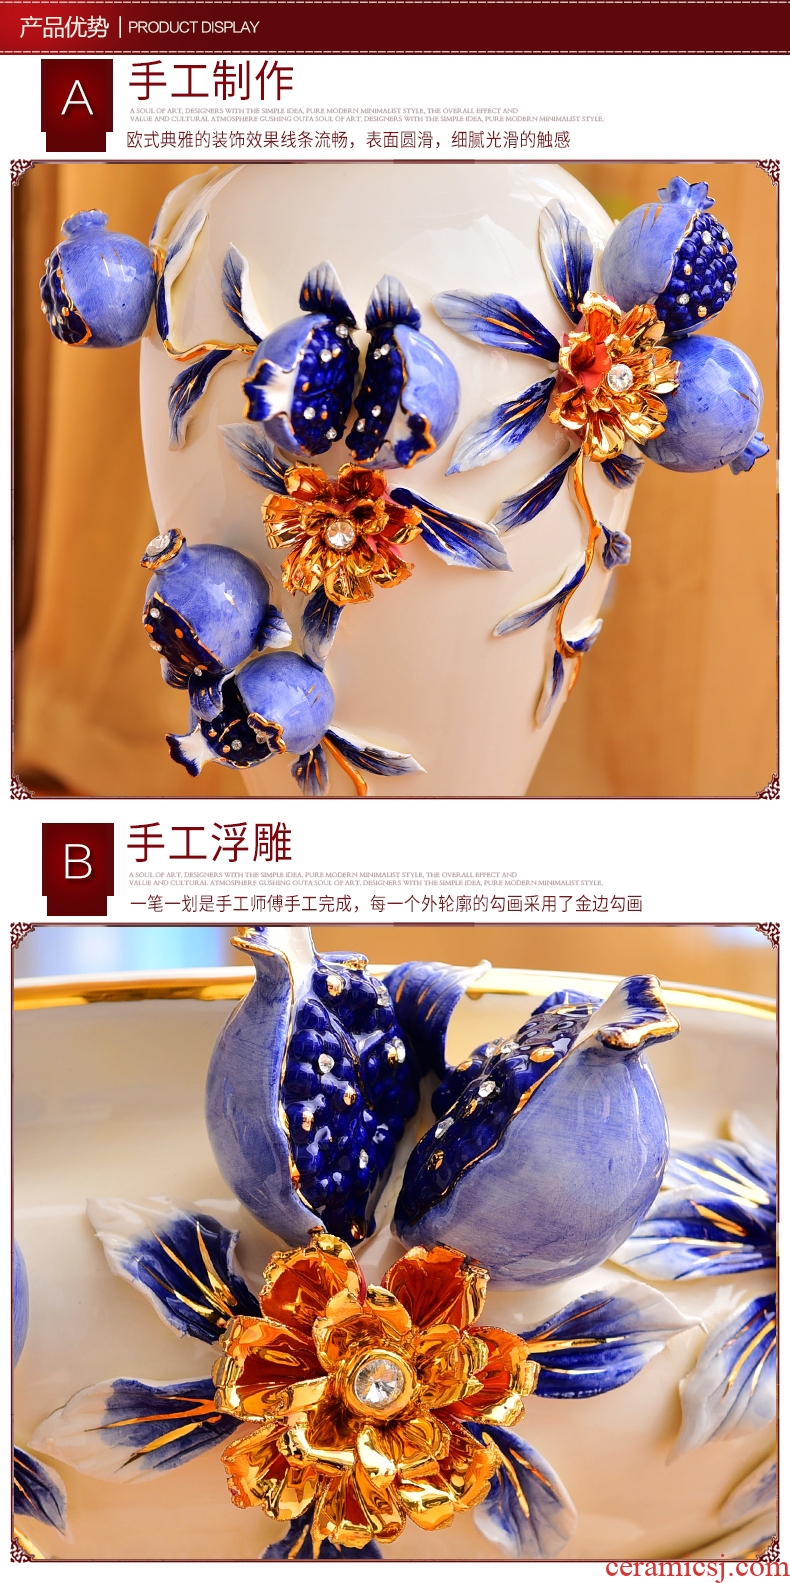 Jingdezhen big hand paint ceramic vase furnishing articles sitting room be born Chinese celadon decoration hotels high - grade decoration - 557851976872